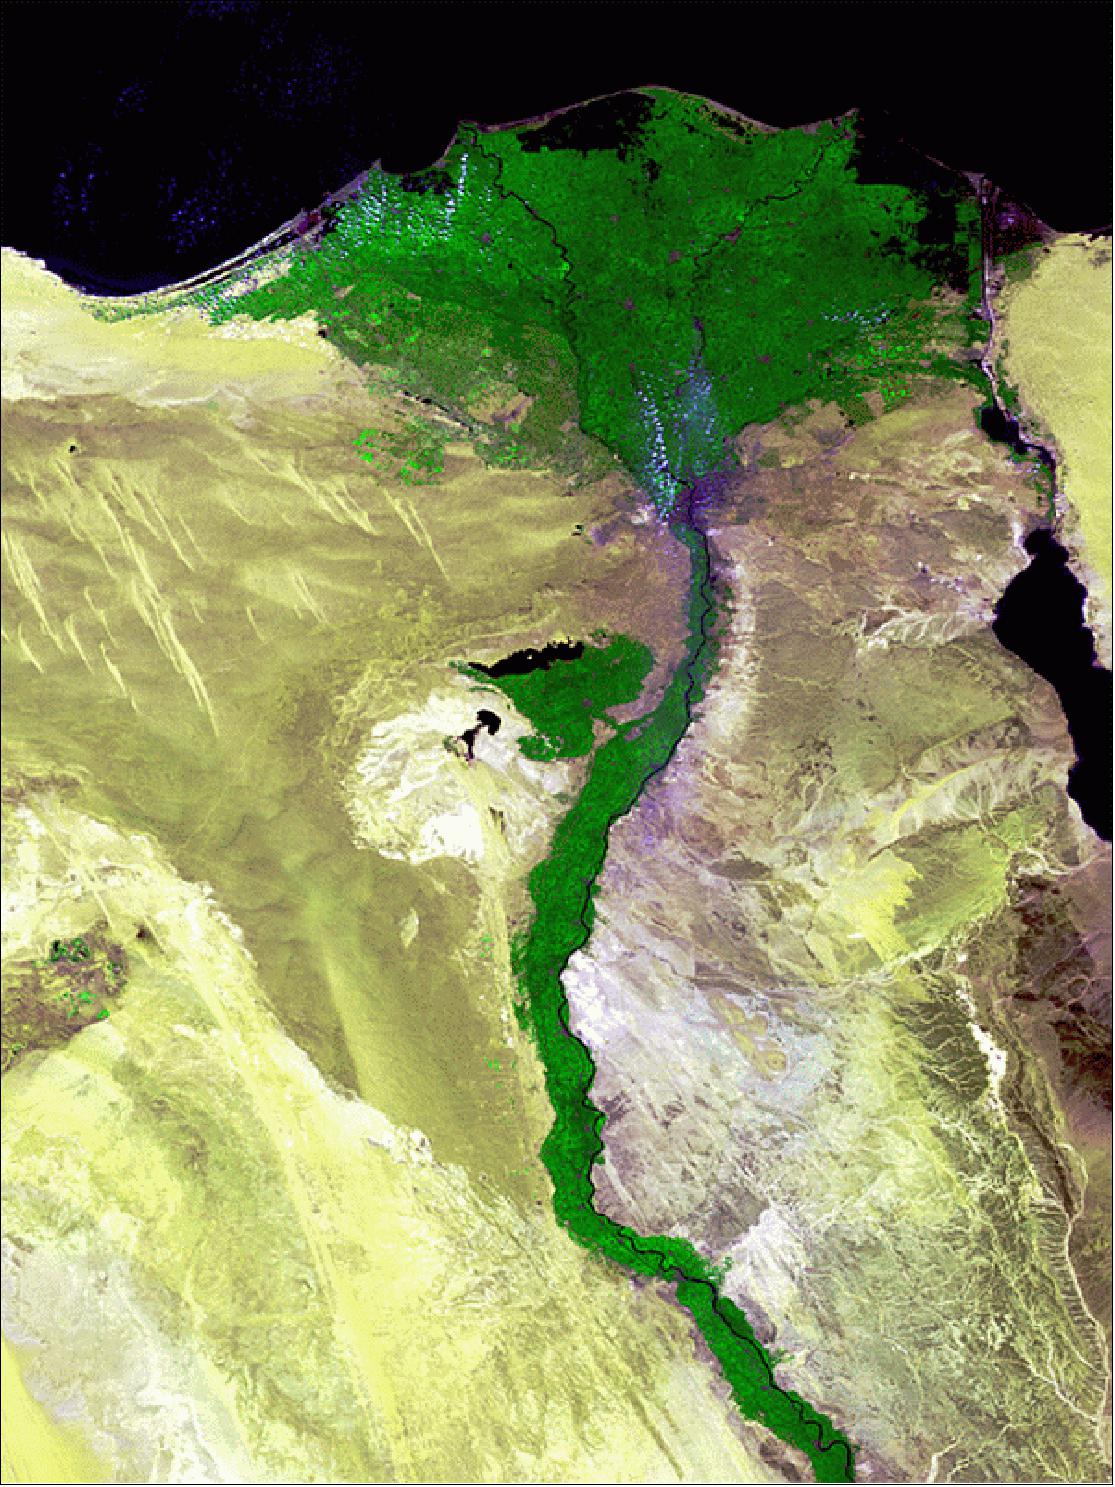 Figure 59: The Nile Delta in Egypt, acquired by PROBA-V on March 24, 2014 (image credit: ESA, VITO)